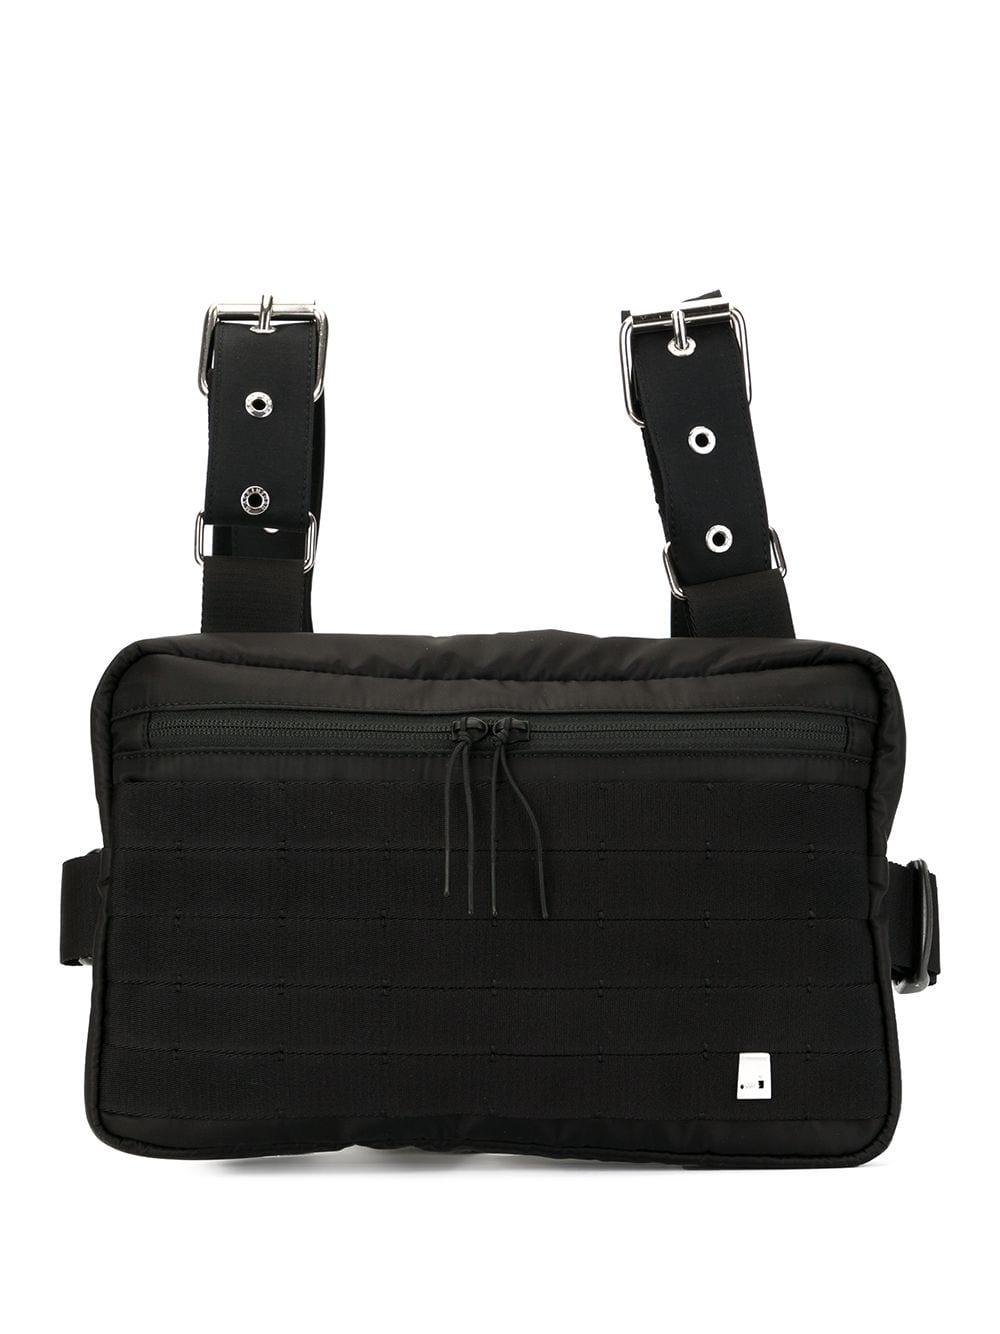 1017 ALYX 9SM Zipped Belt Bag in Black - Lyst